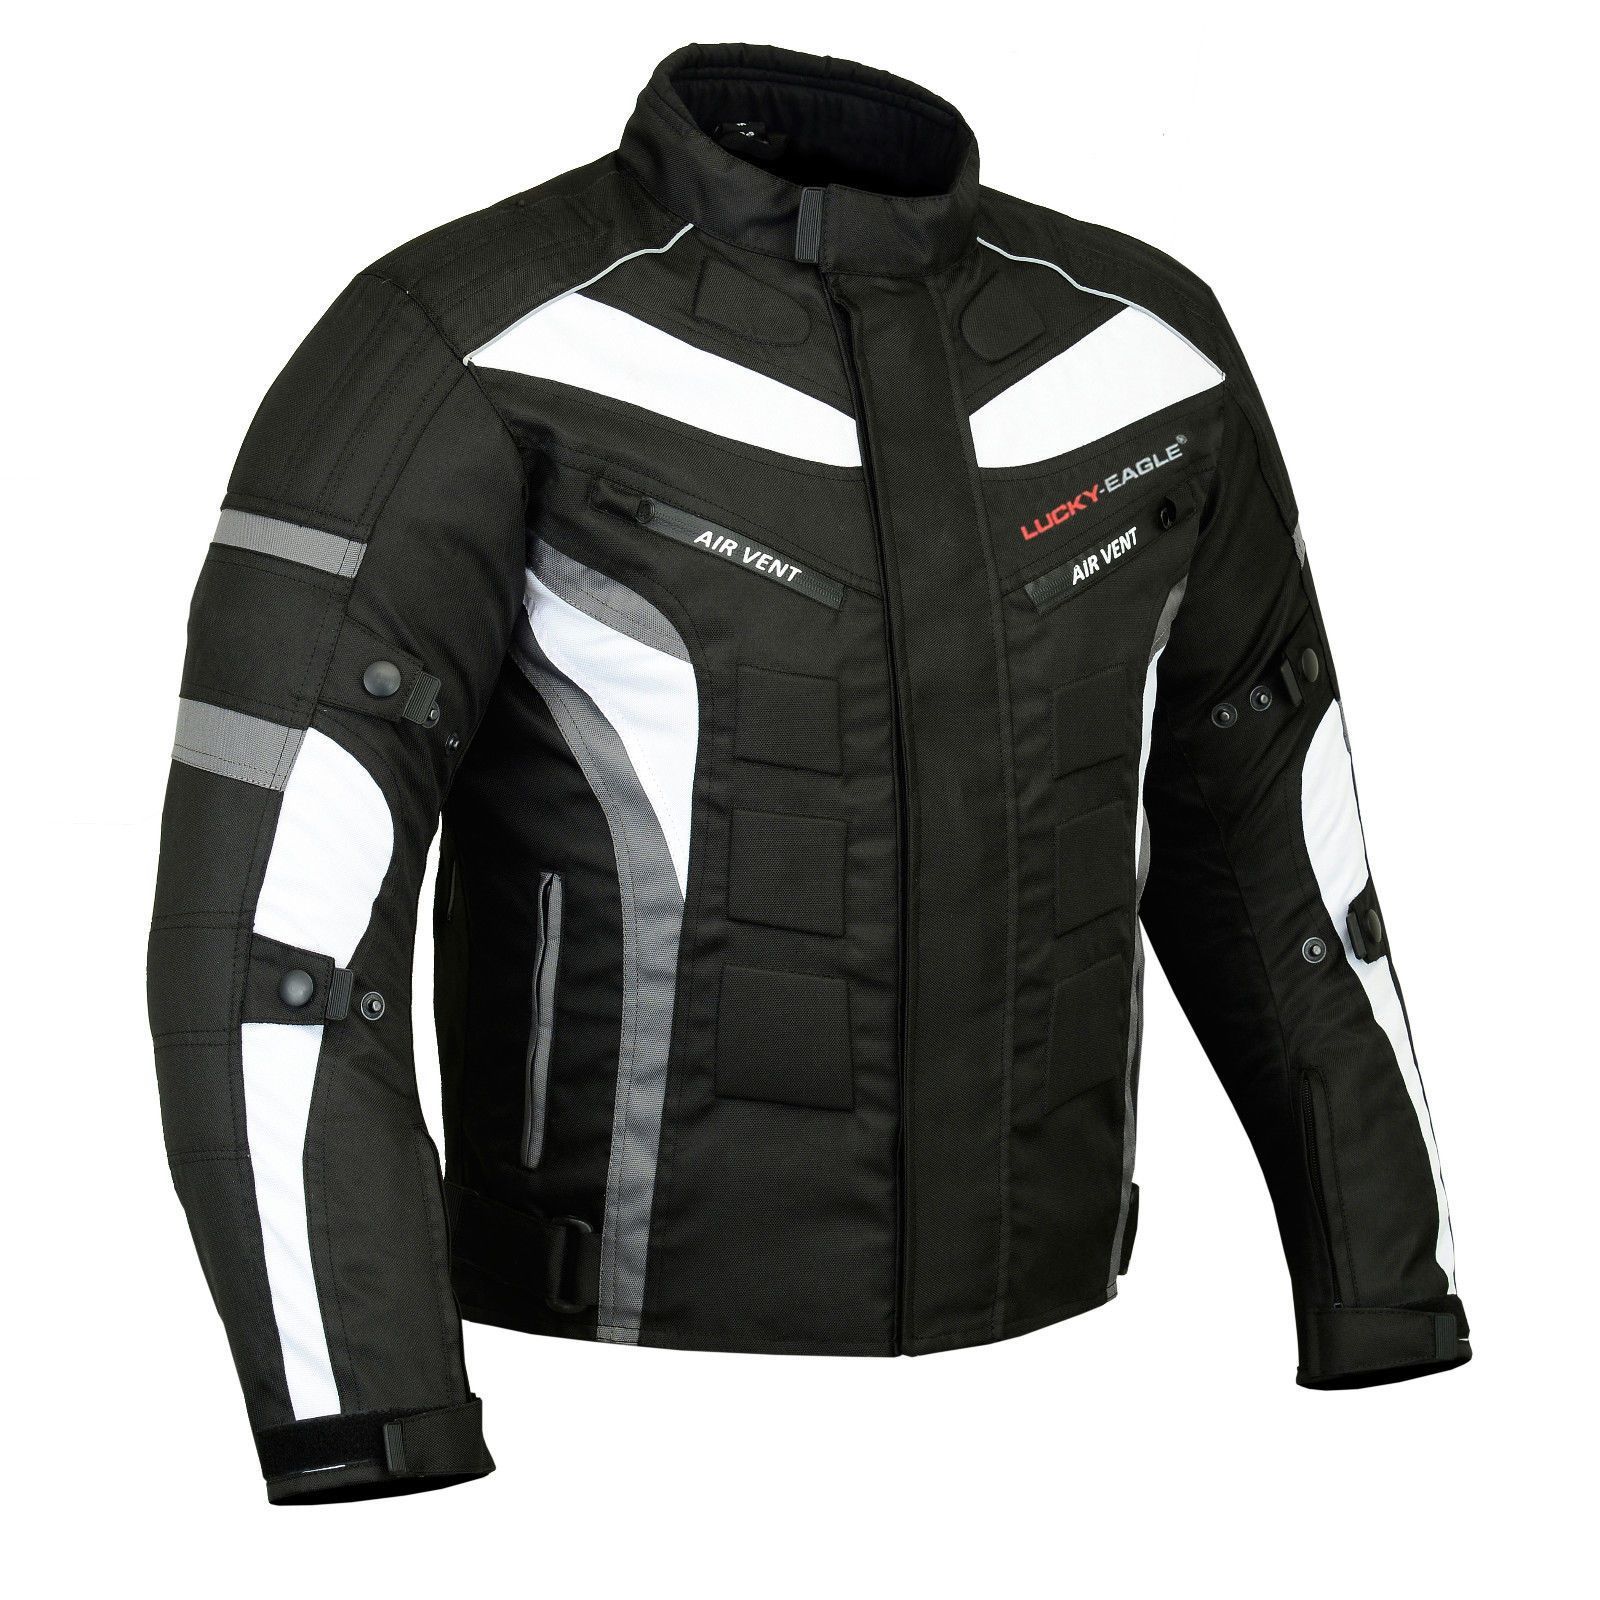 Profirst 6 Packs Cordura Motorcycle Jacket (Grey) -TEXTILE JACKETS